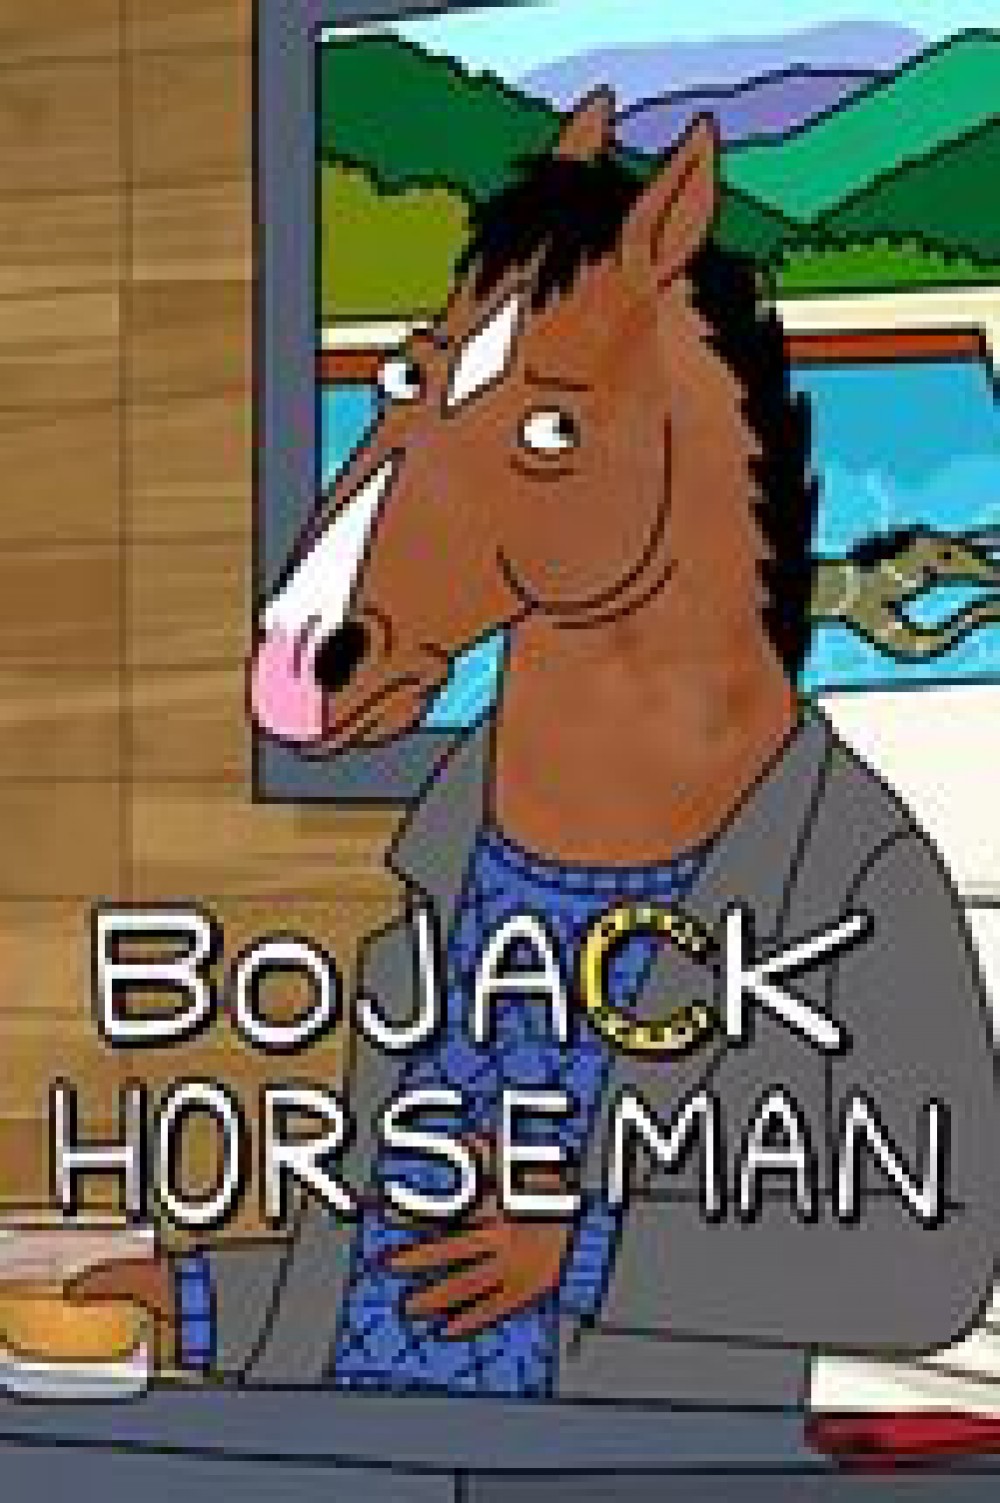 BoJack Horseman season 4 is to premiere in 2017